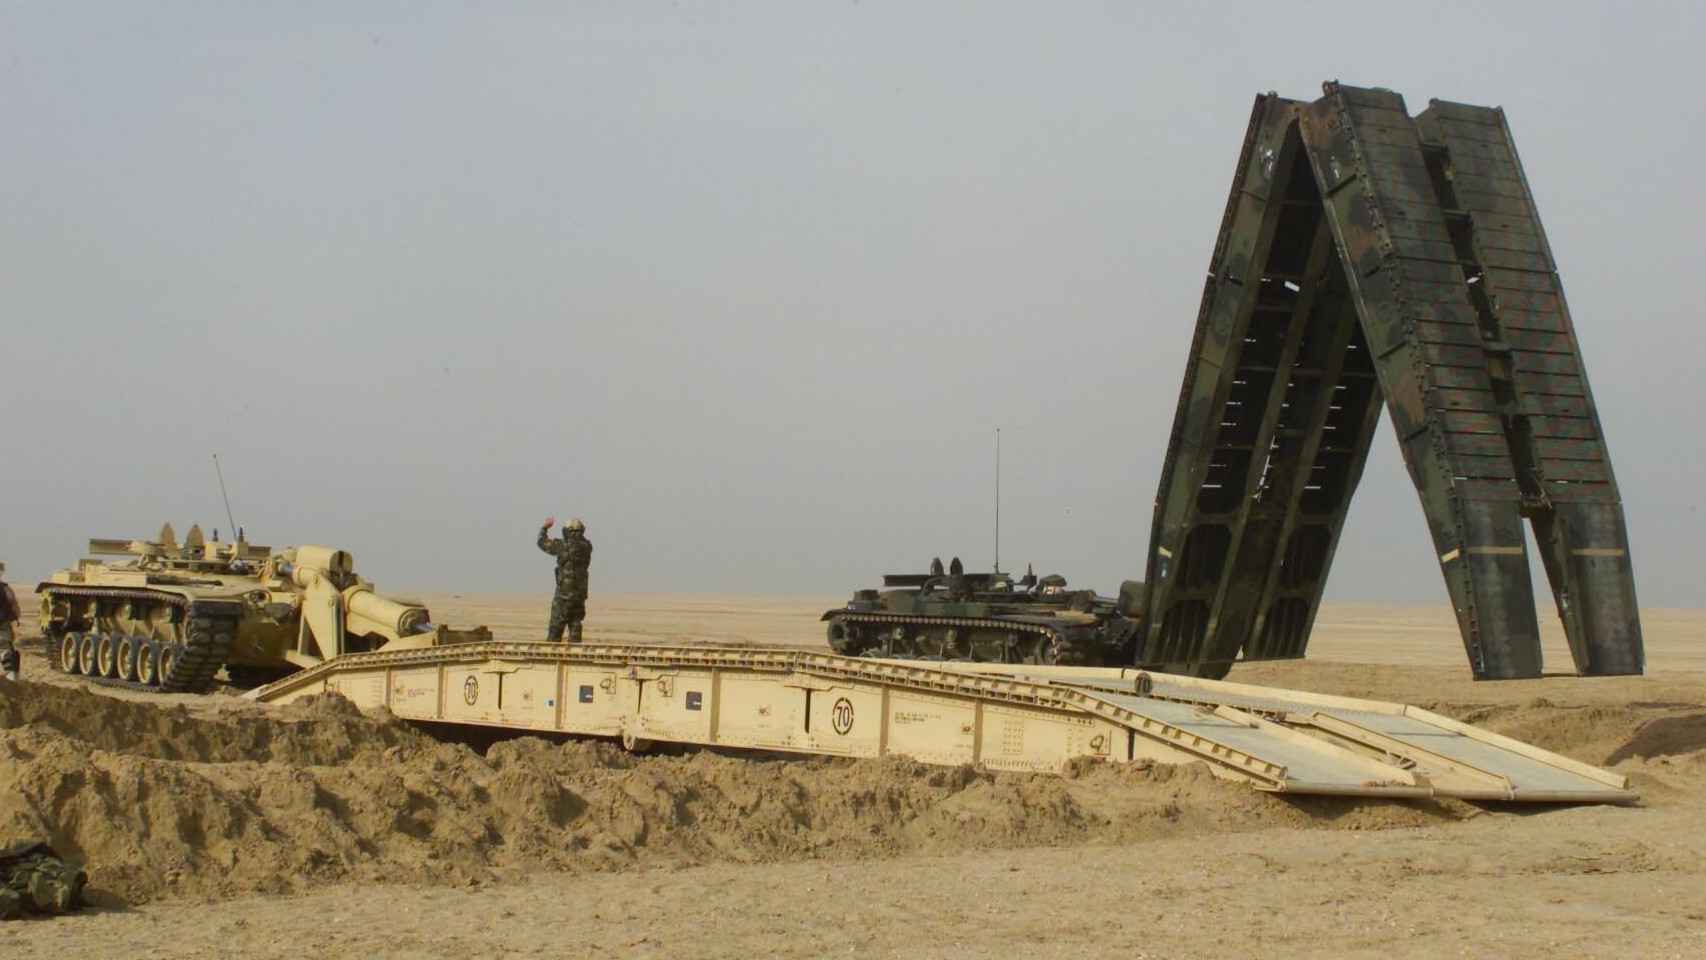 Deployed bridge of the M60 ALVB